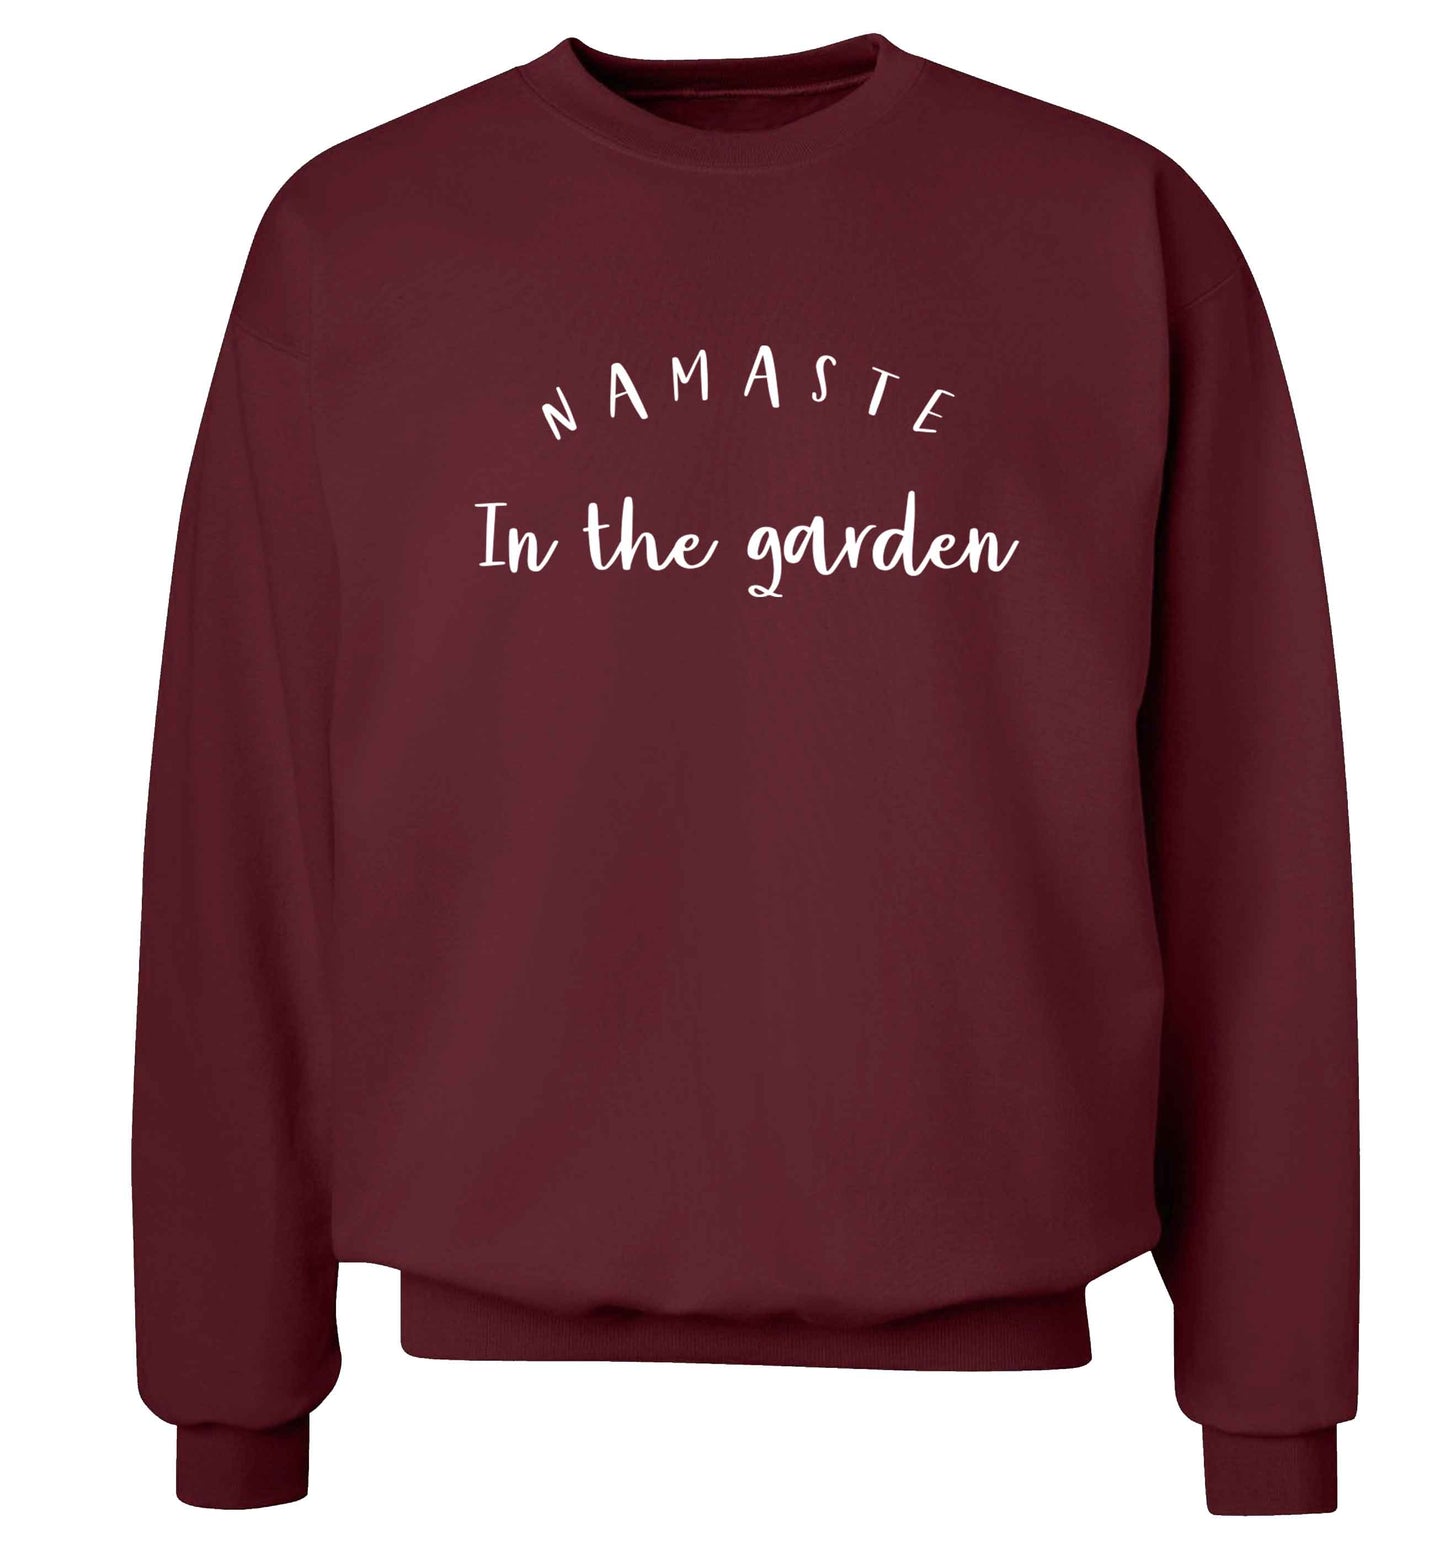 Namaste in the garden Adult's unisex maroon Sweater 2XL